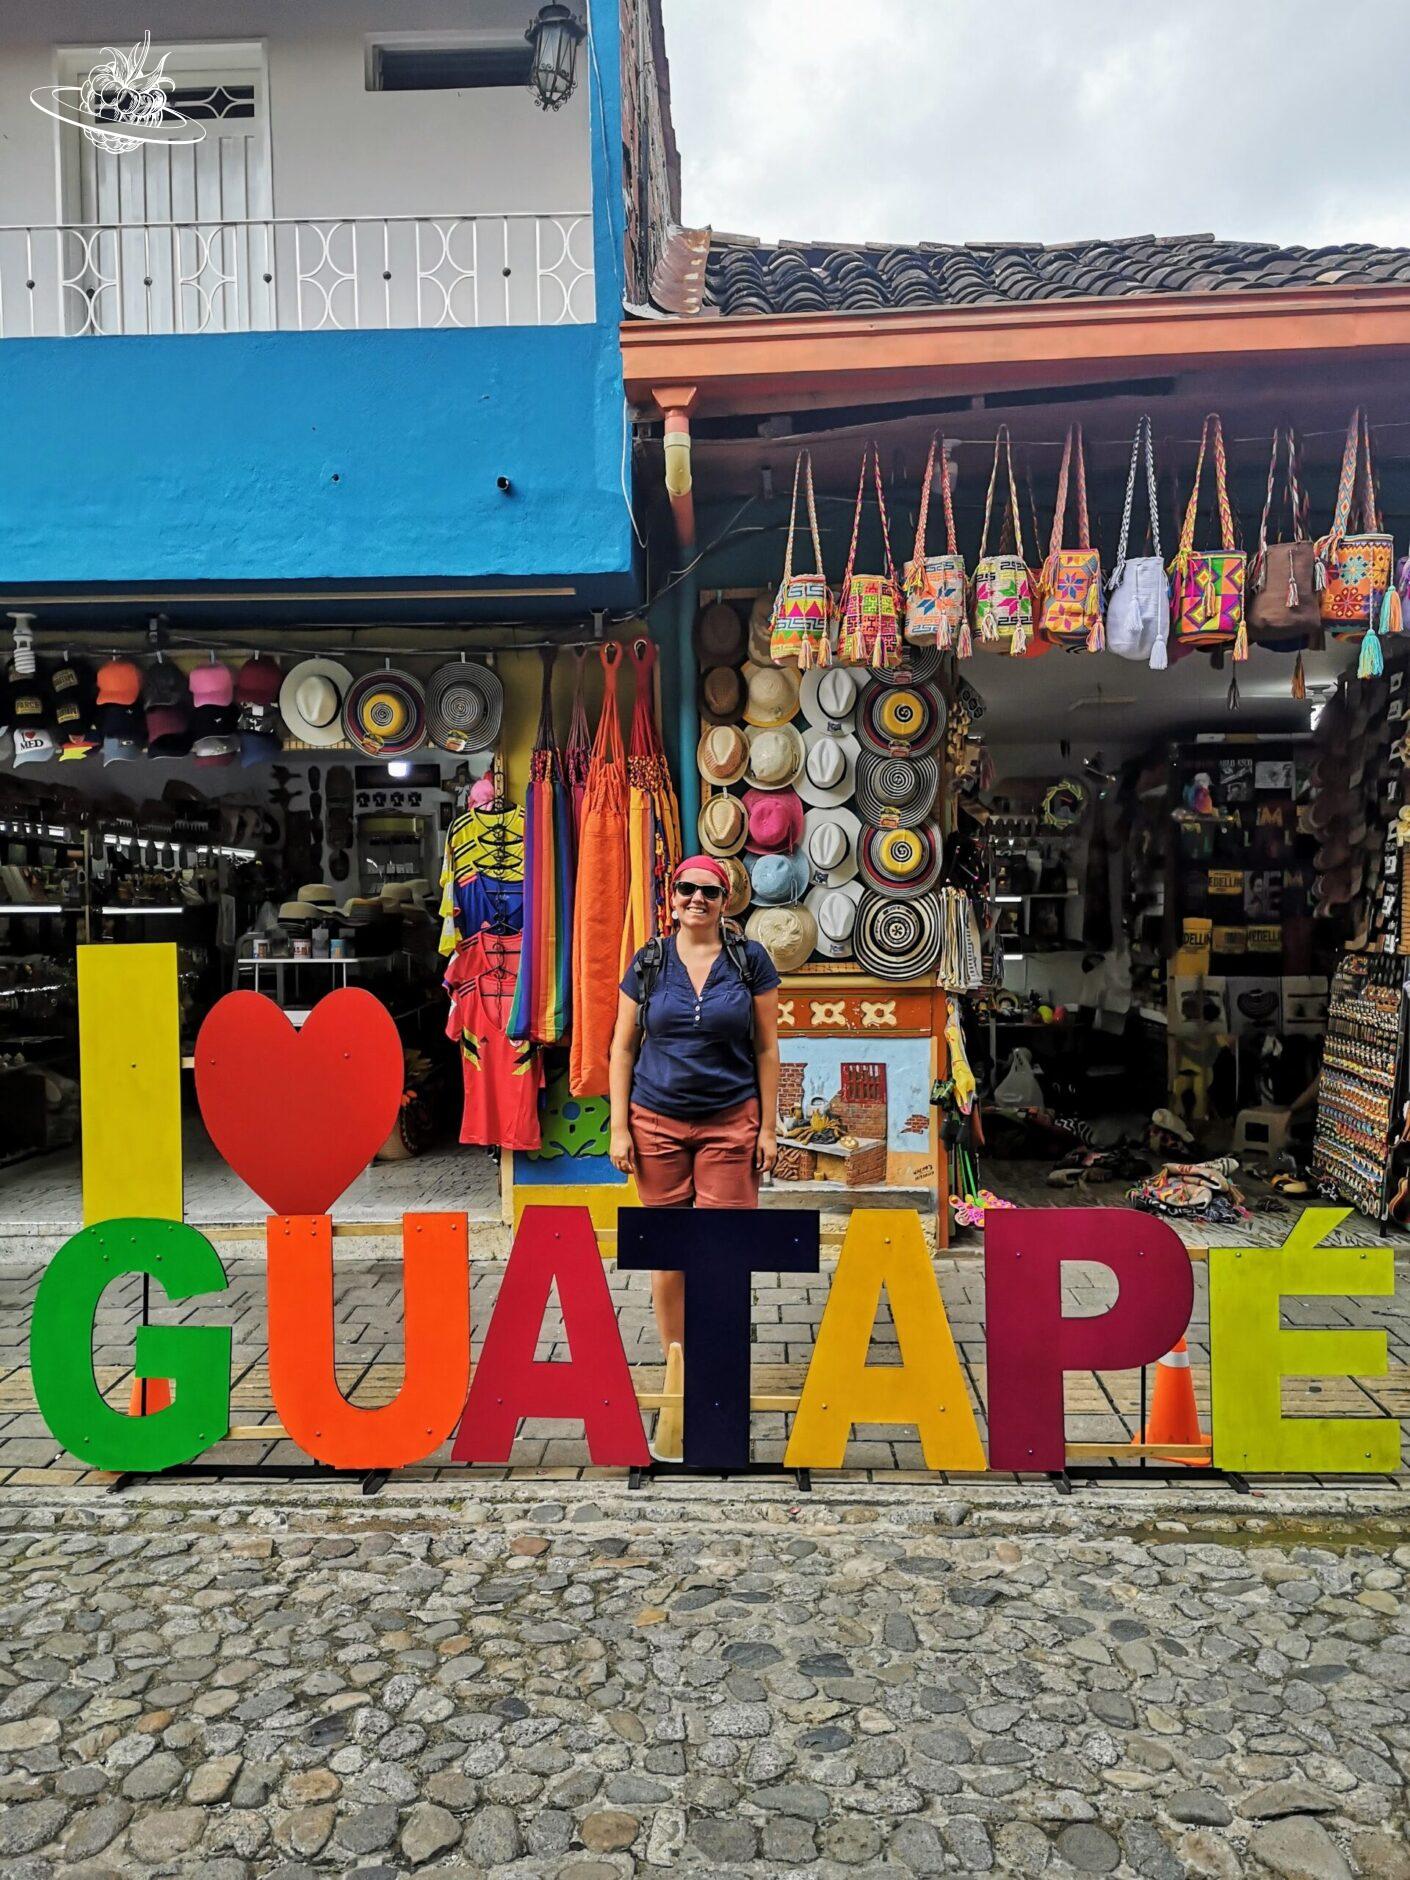 Andrea hinter einem I love Guatapé-Schild